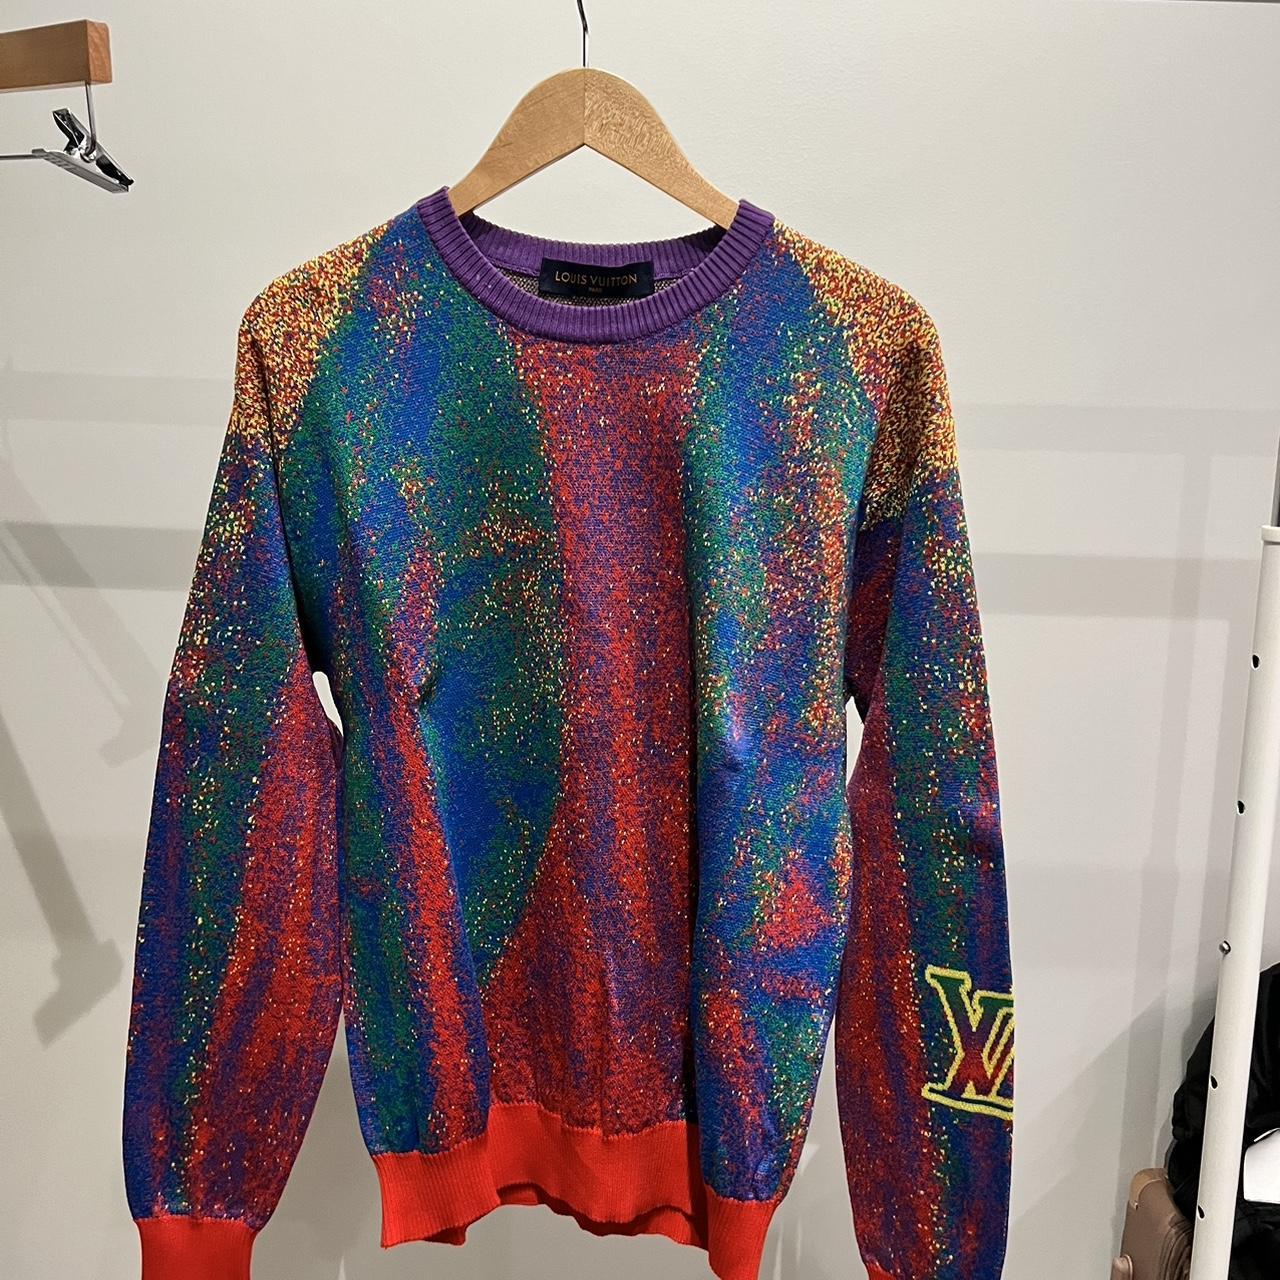 Louie Vuitton multi-colored sweater #LV #sweater